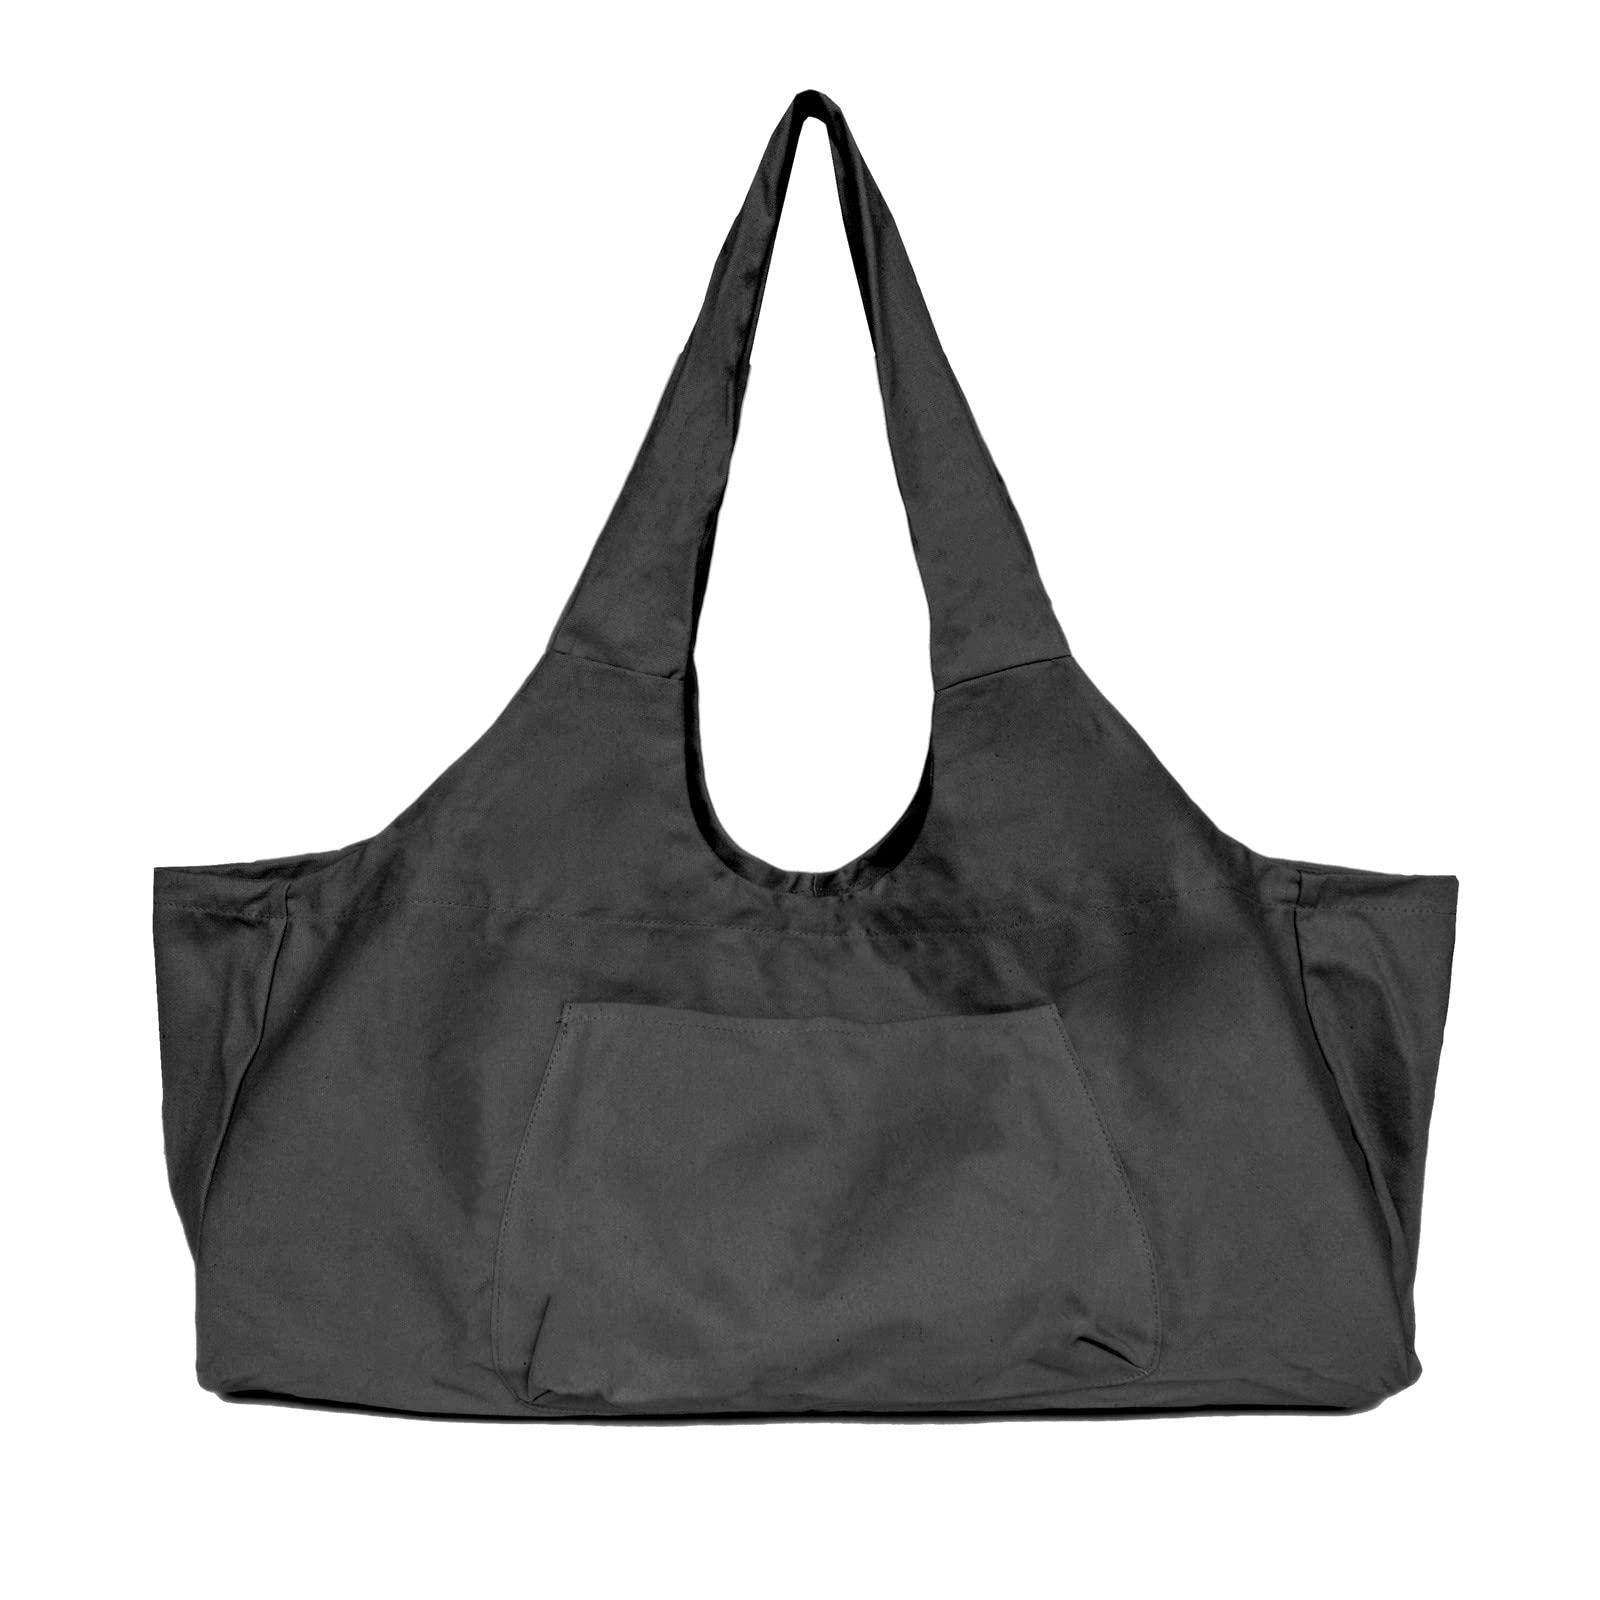 3DTengkit Yoga Bag Large Yoga Mat Bag,Canvas Yoga mat Tote Bag with Inside Zip Pocket Fits Most Size Mats (black) 1